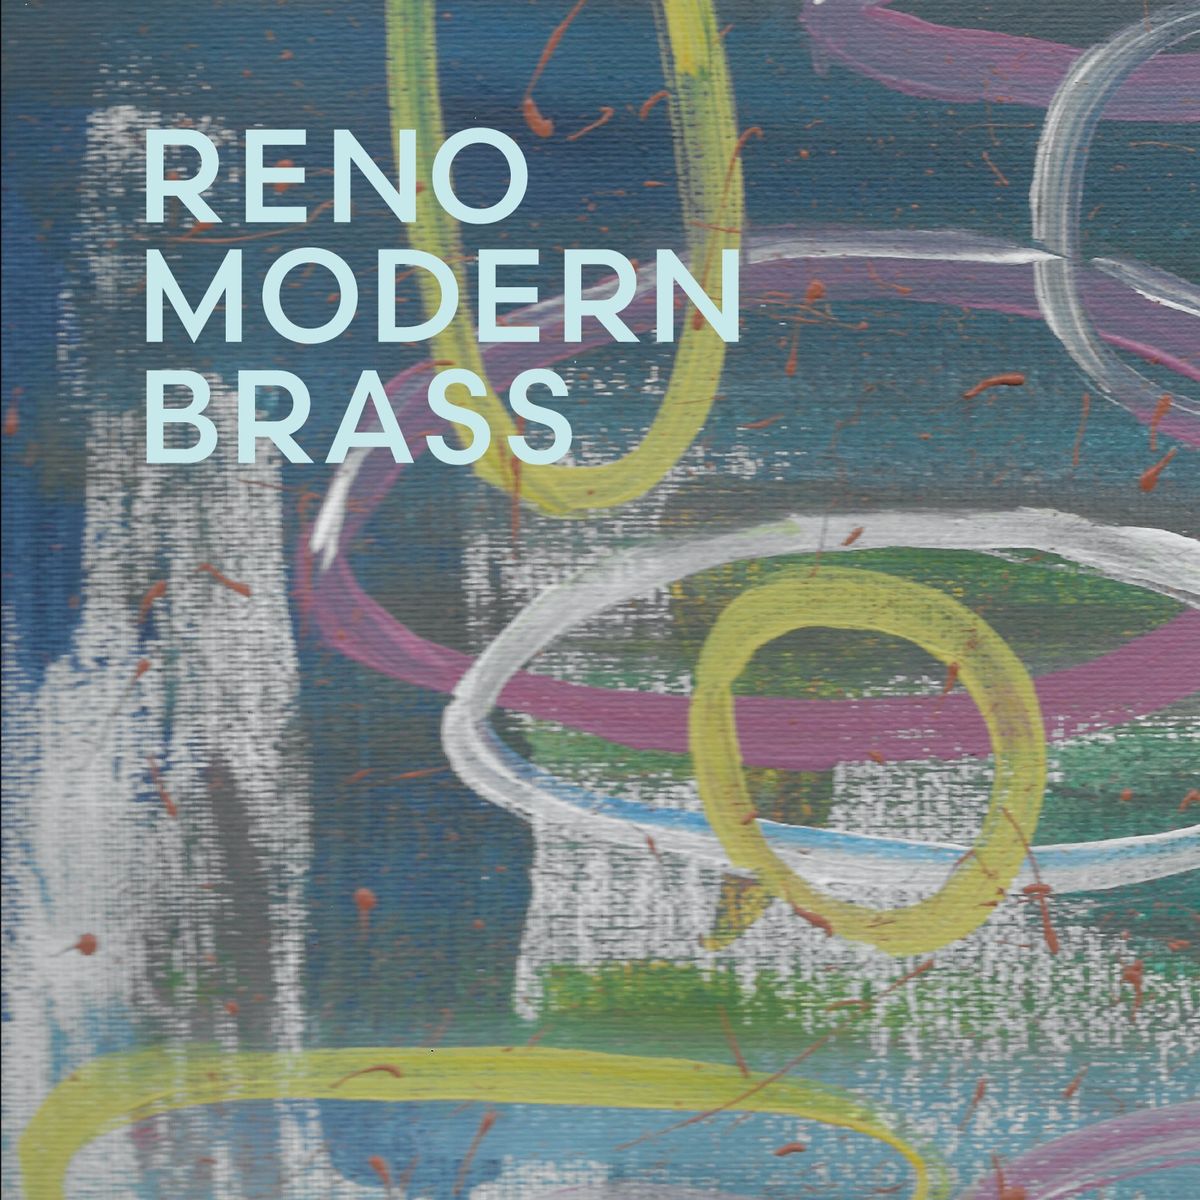 Reno Modern Brass Album Release Party\/Concert